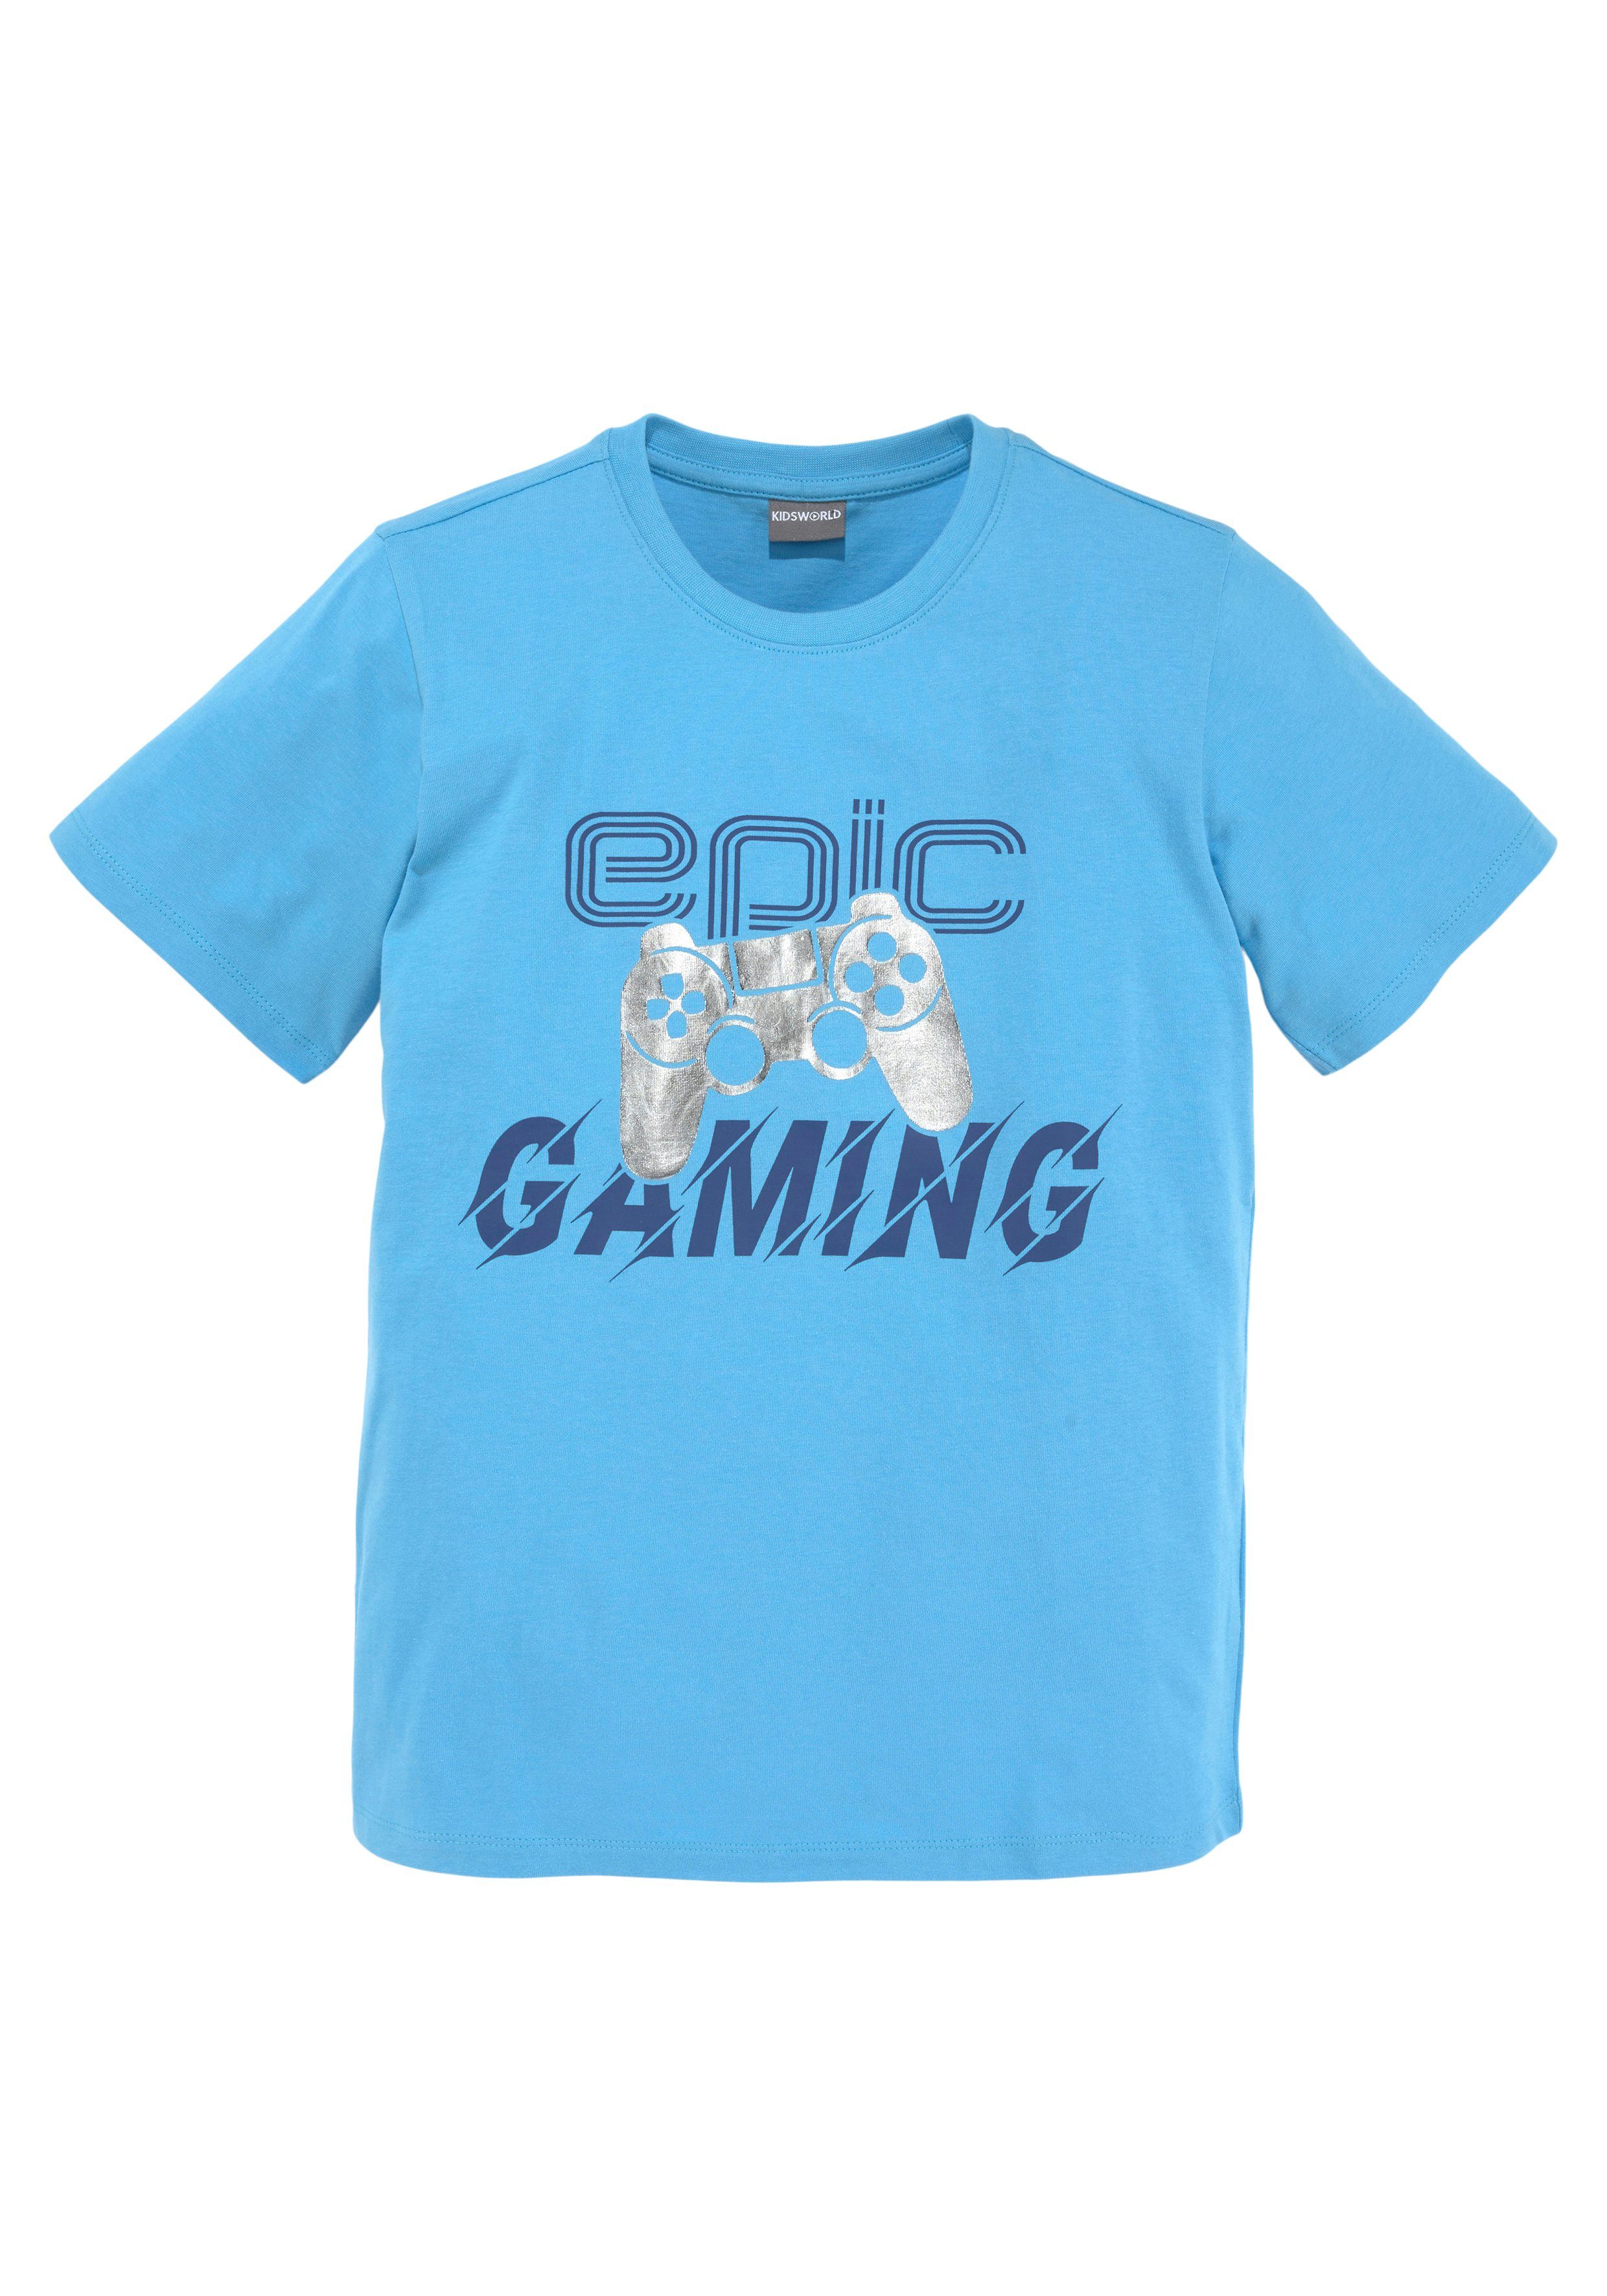 EPIC GAMING KIDSWORLD Folienprint T-Shirt